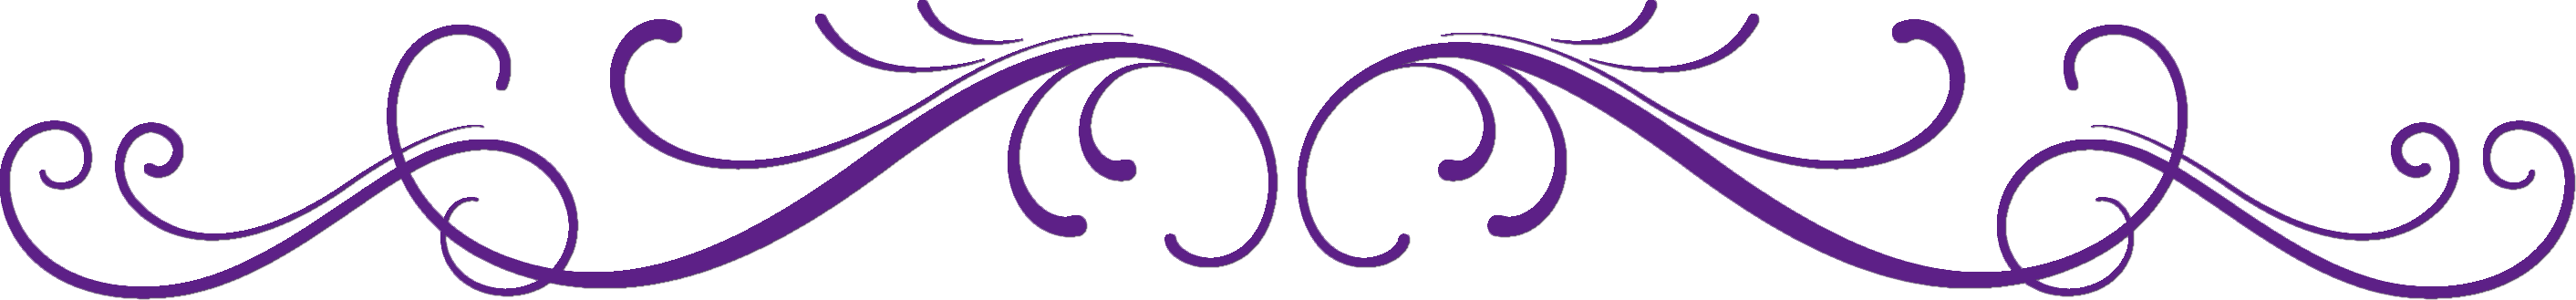 clipart dividers purple